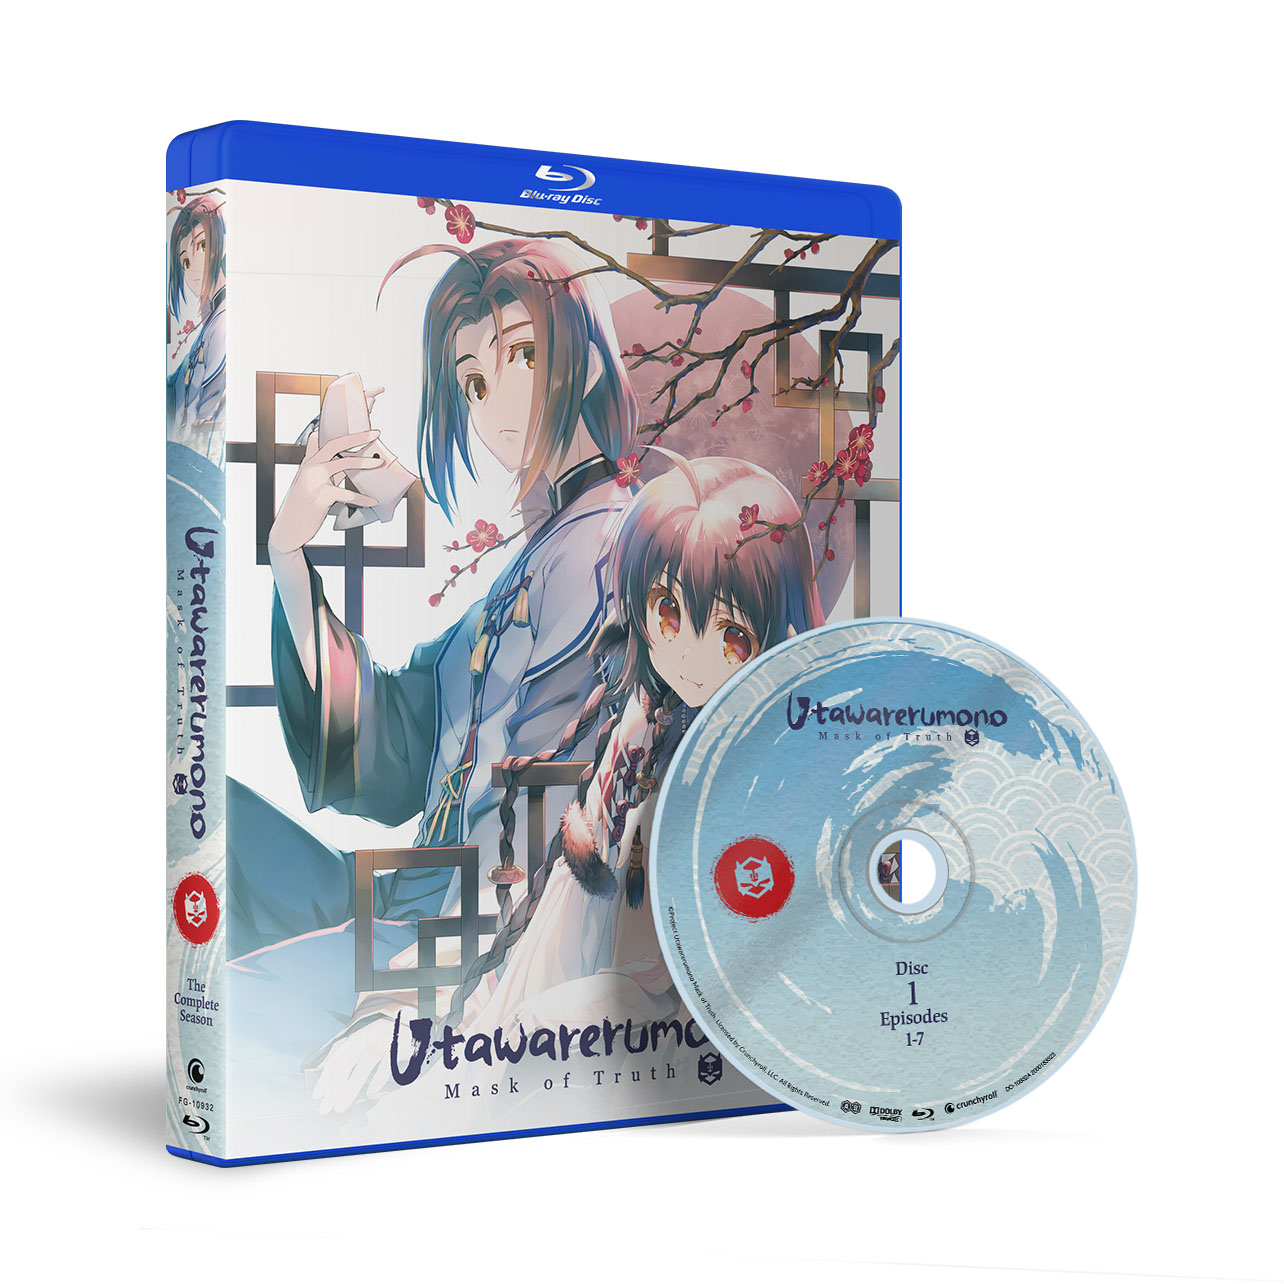 Utawarerumono Mask of Truth - The Complete Season - Blu-ray image count 1